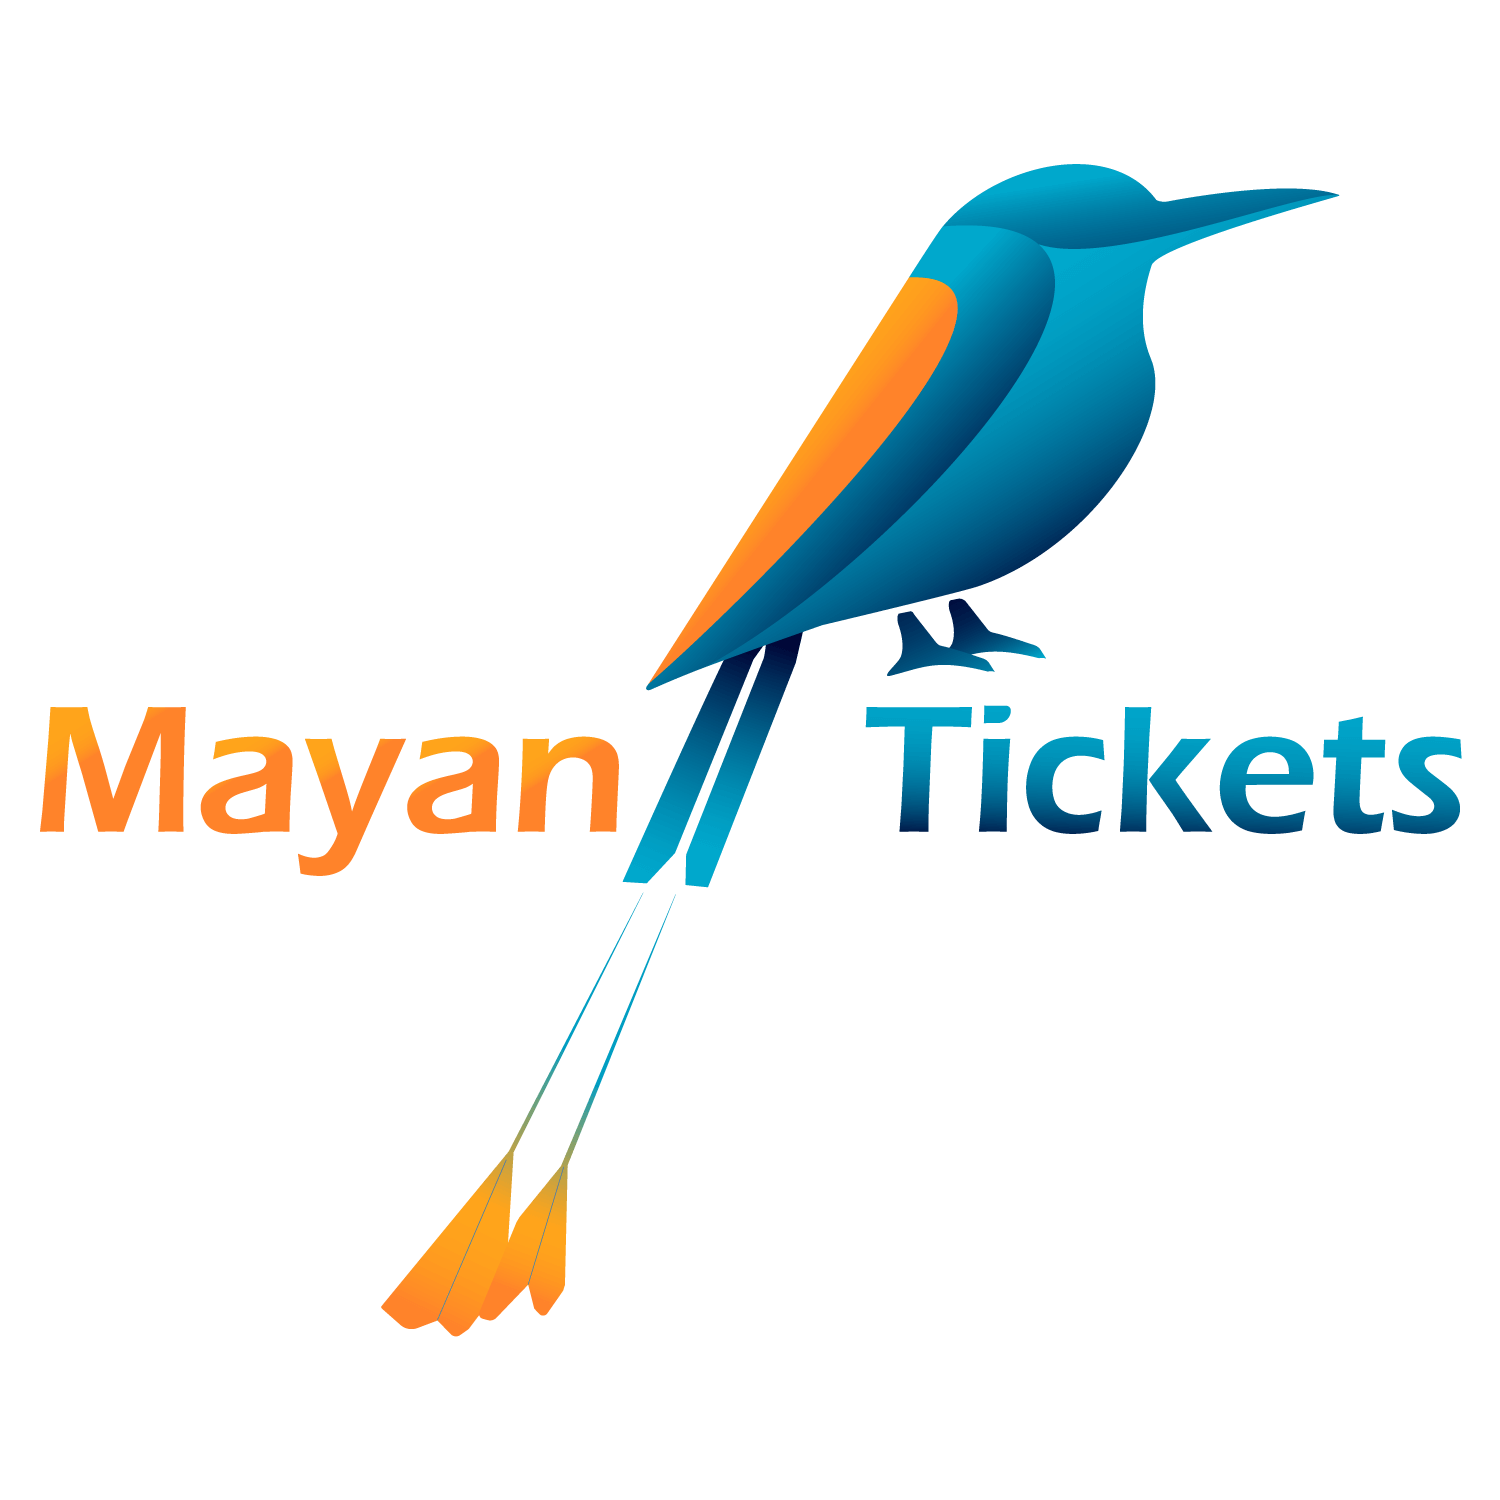 mayan tickets logo